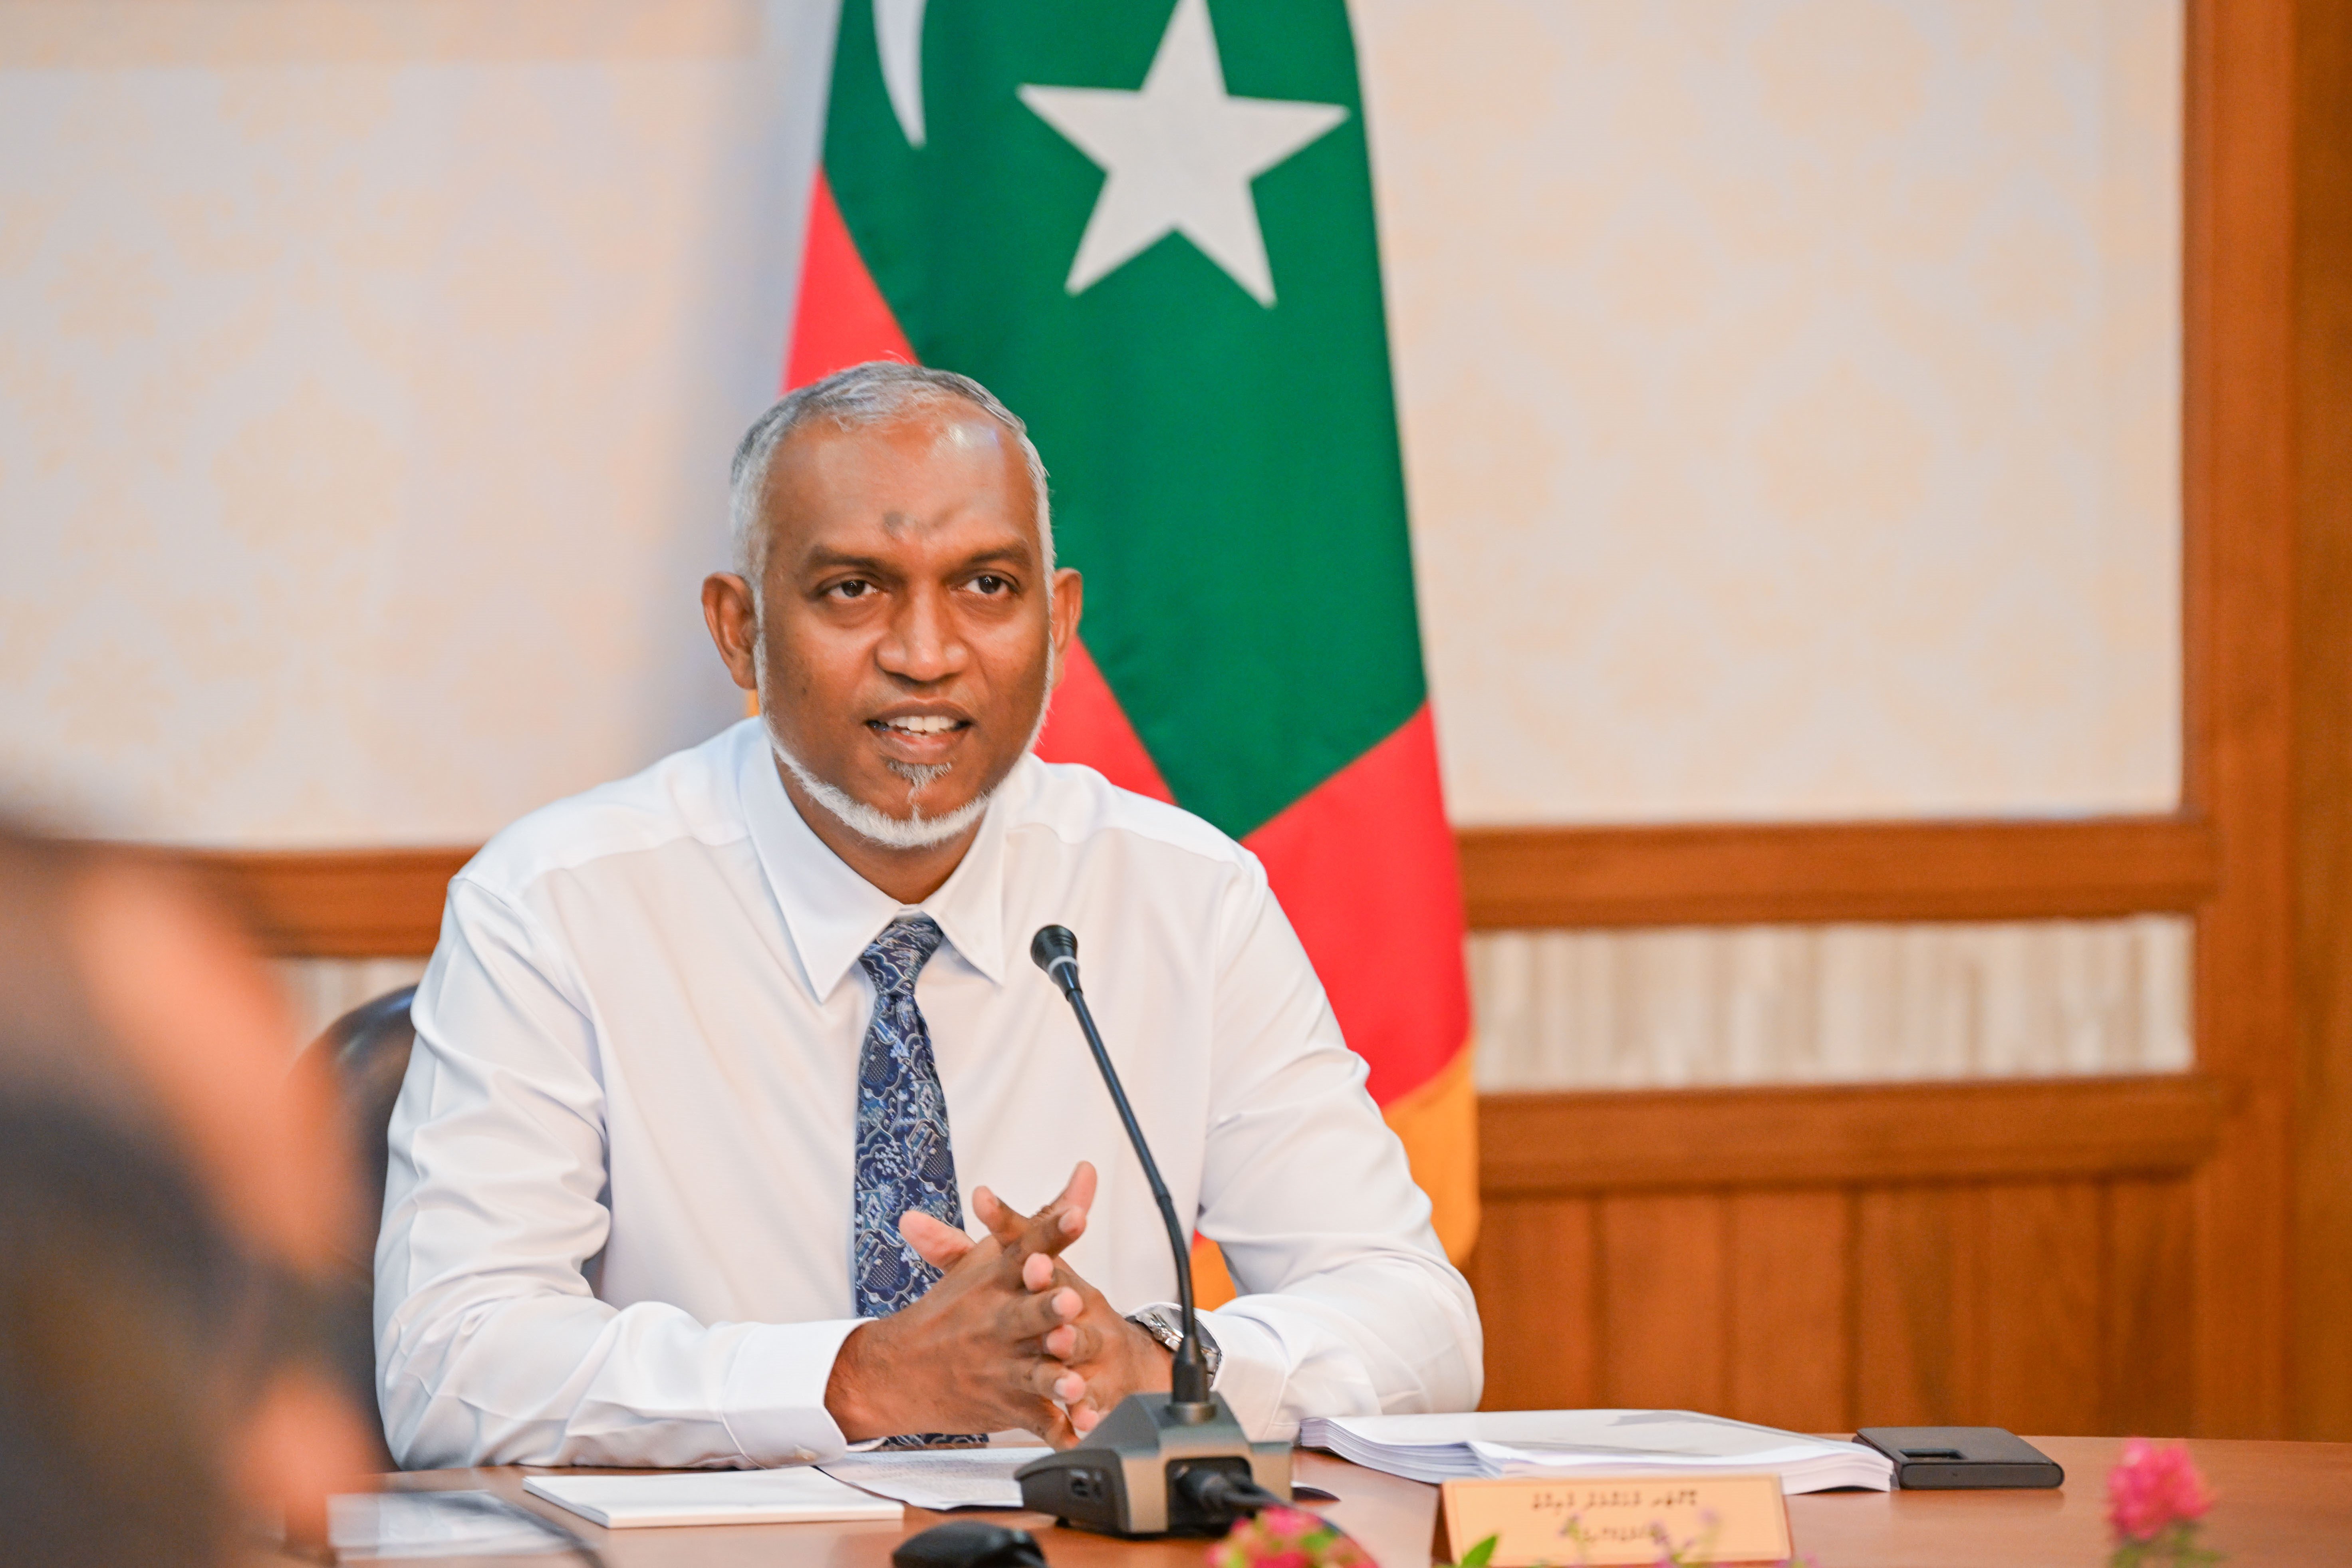 President Dr. Muizzu establishes Development Bank of Maldives